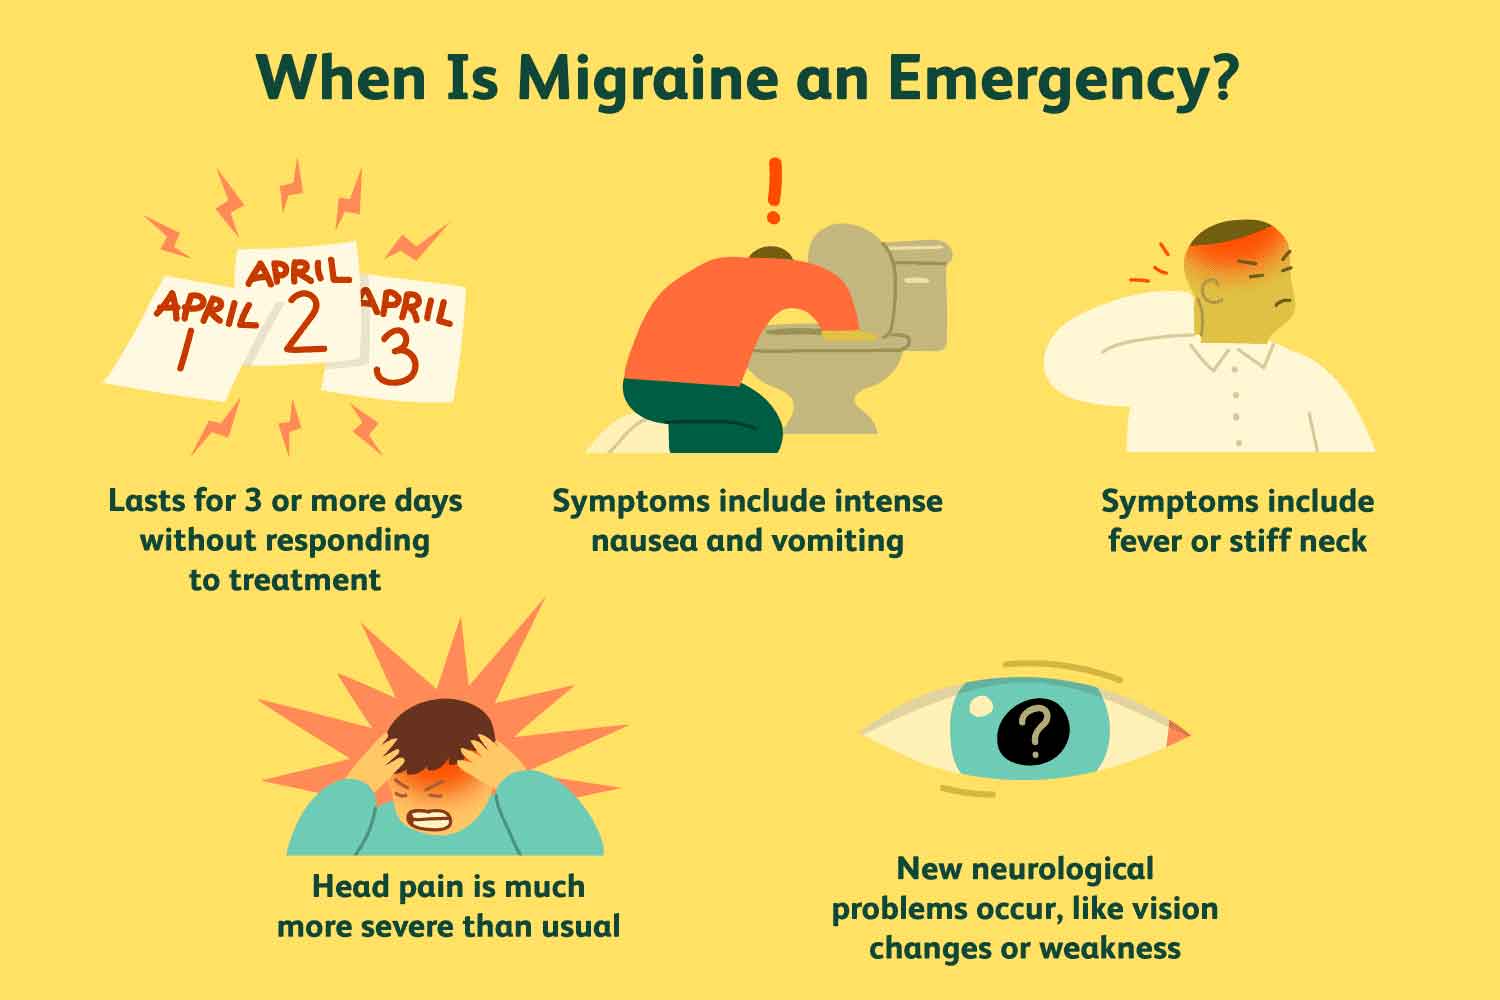 Migraine an Emergency